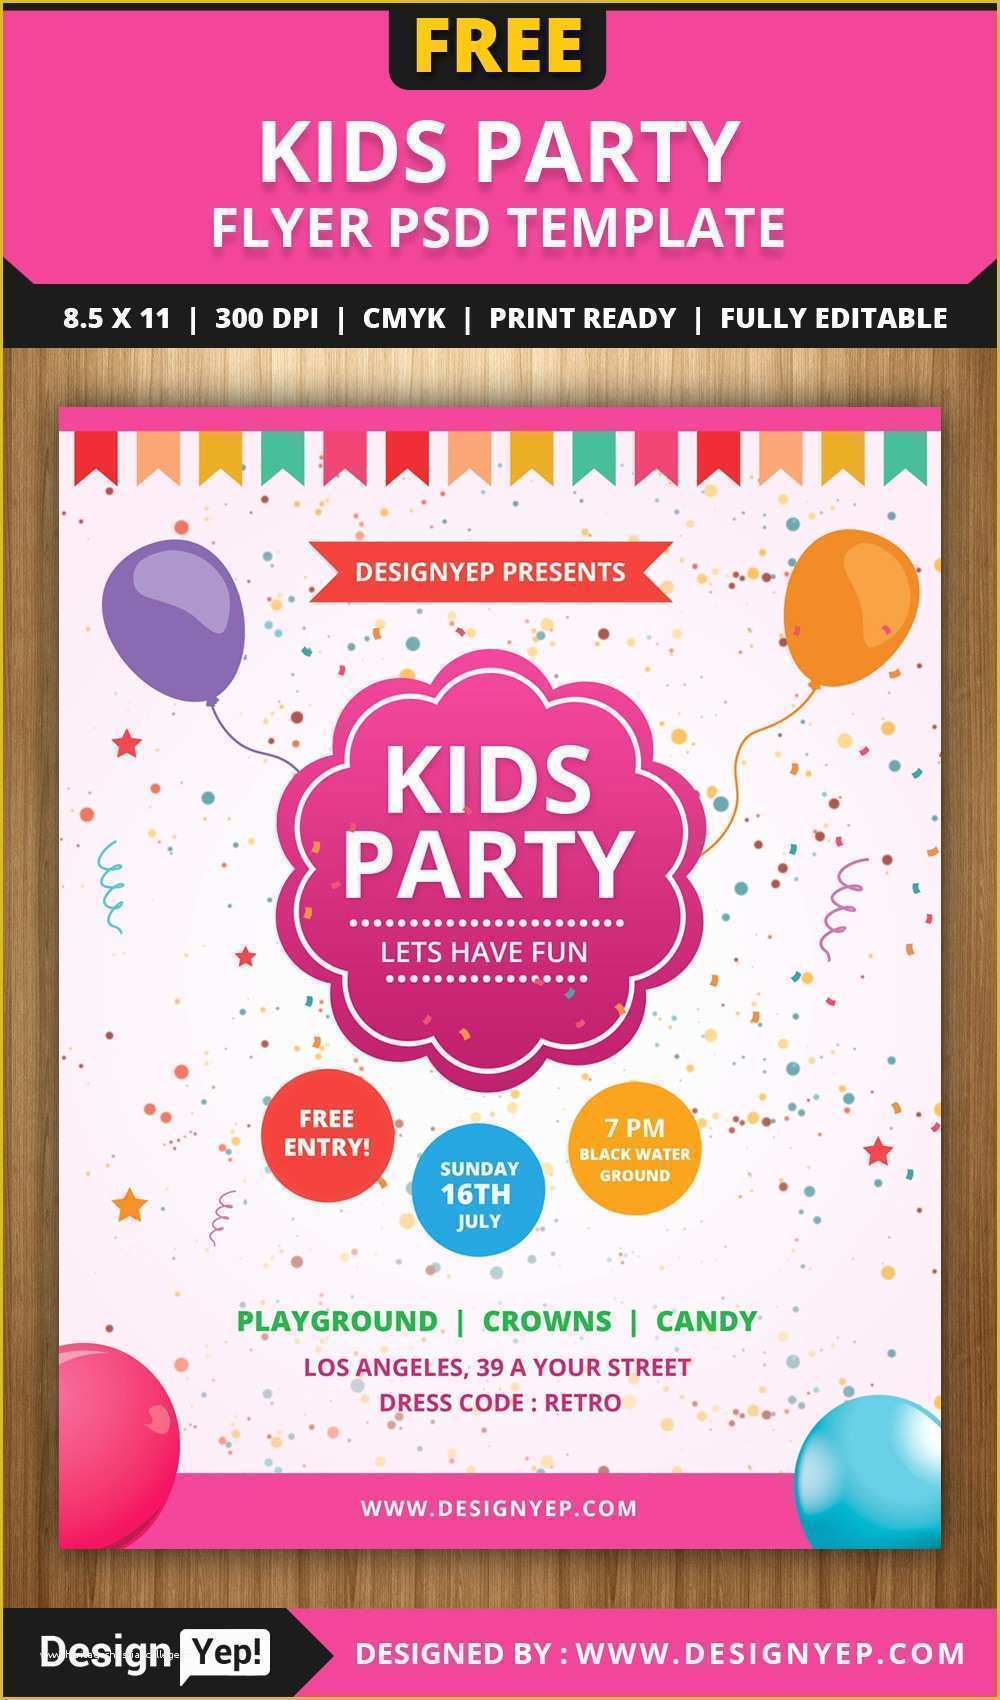 Celebration Flyer Template Free Of Free Kids Party Flyer Psd Template Designyep